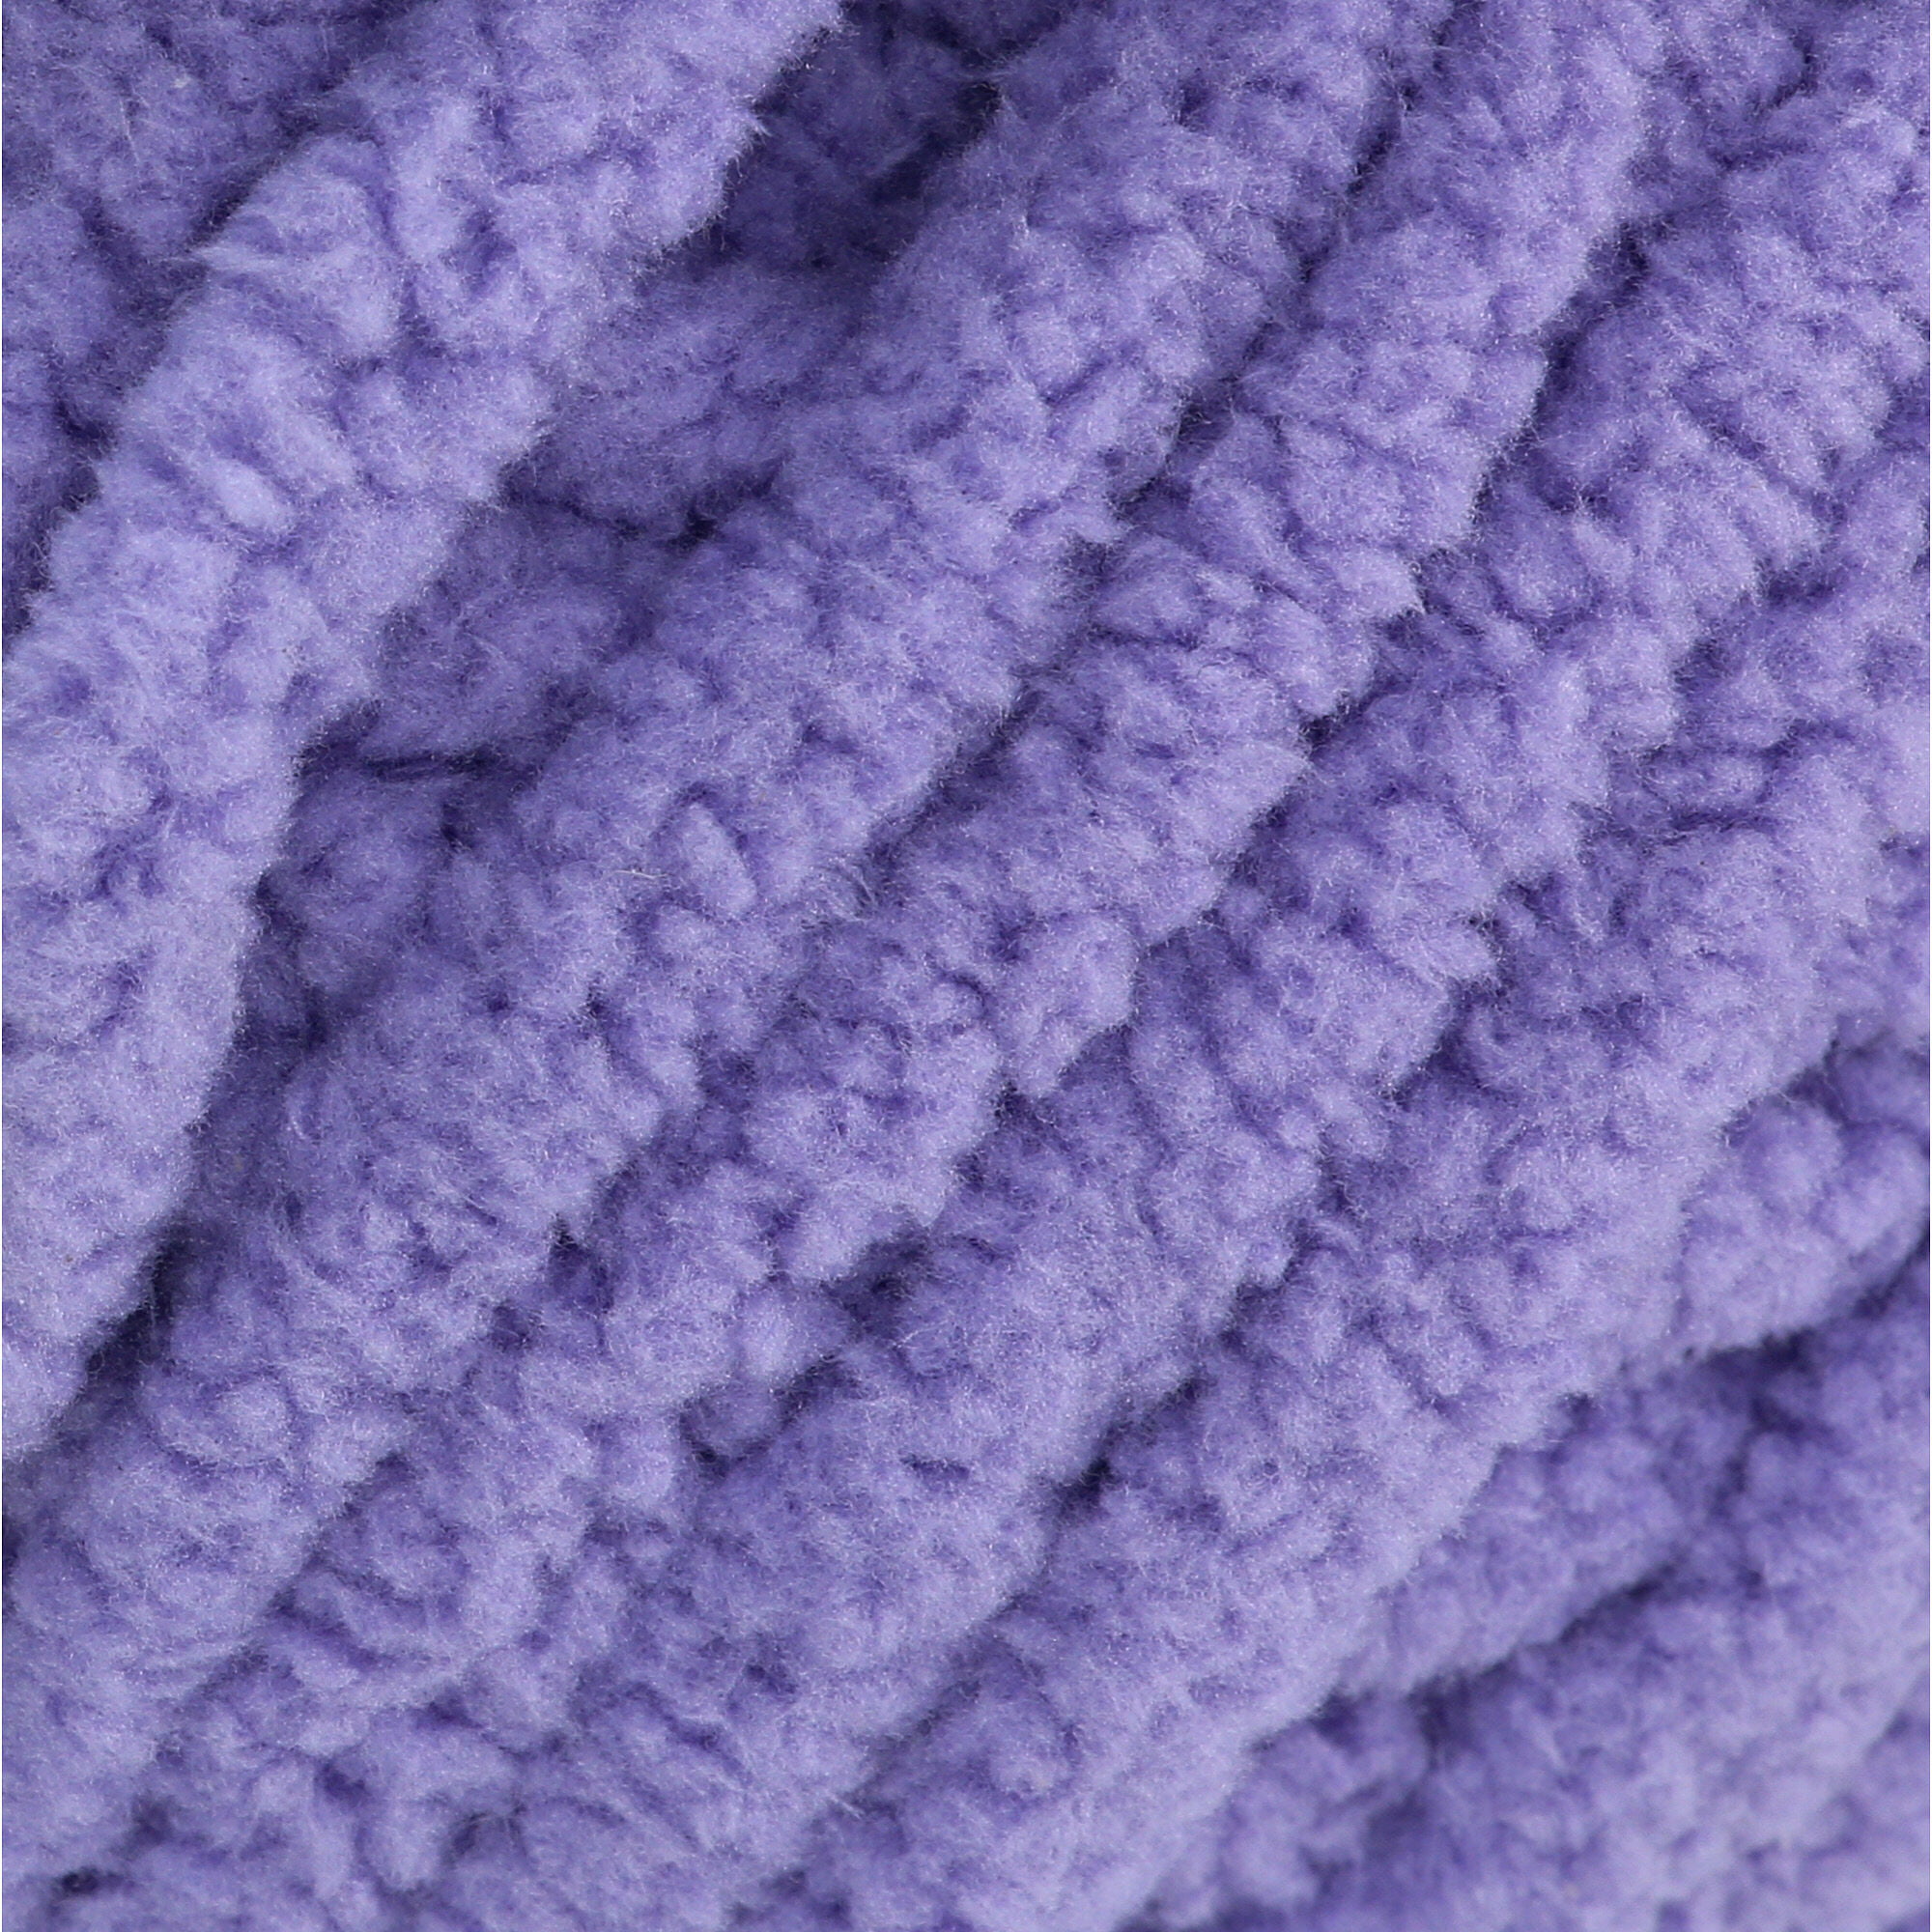 Bernat Maker Knit T-shirt Yarn Crafts72/28 Cotton/Nylon NEW Pink & Blue